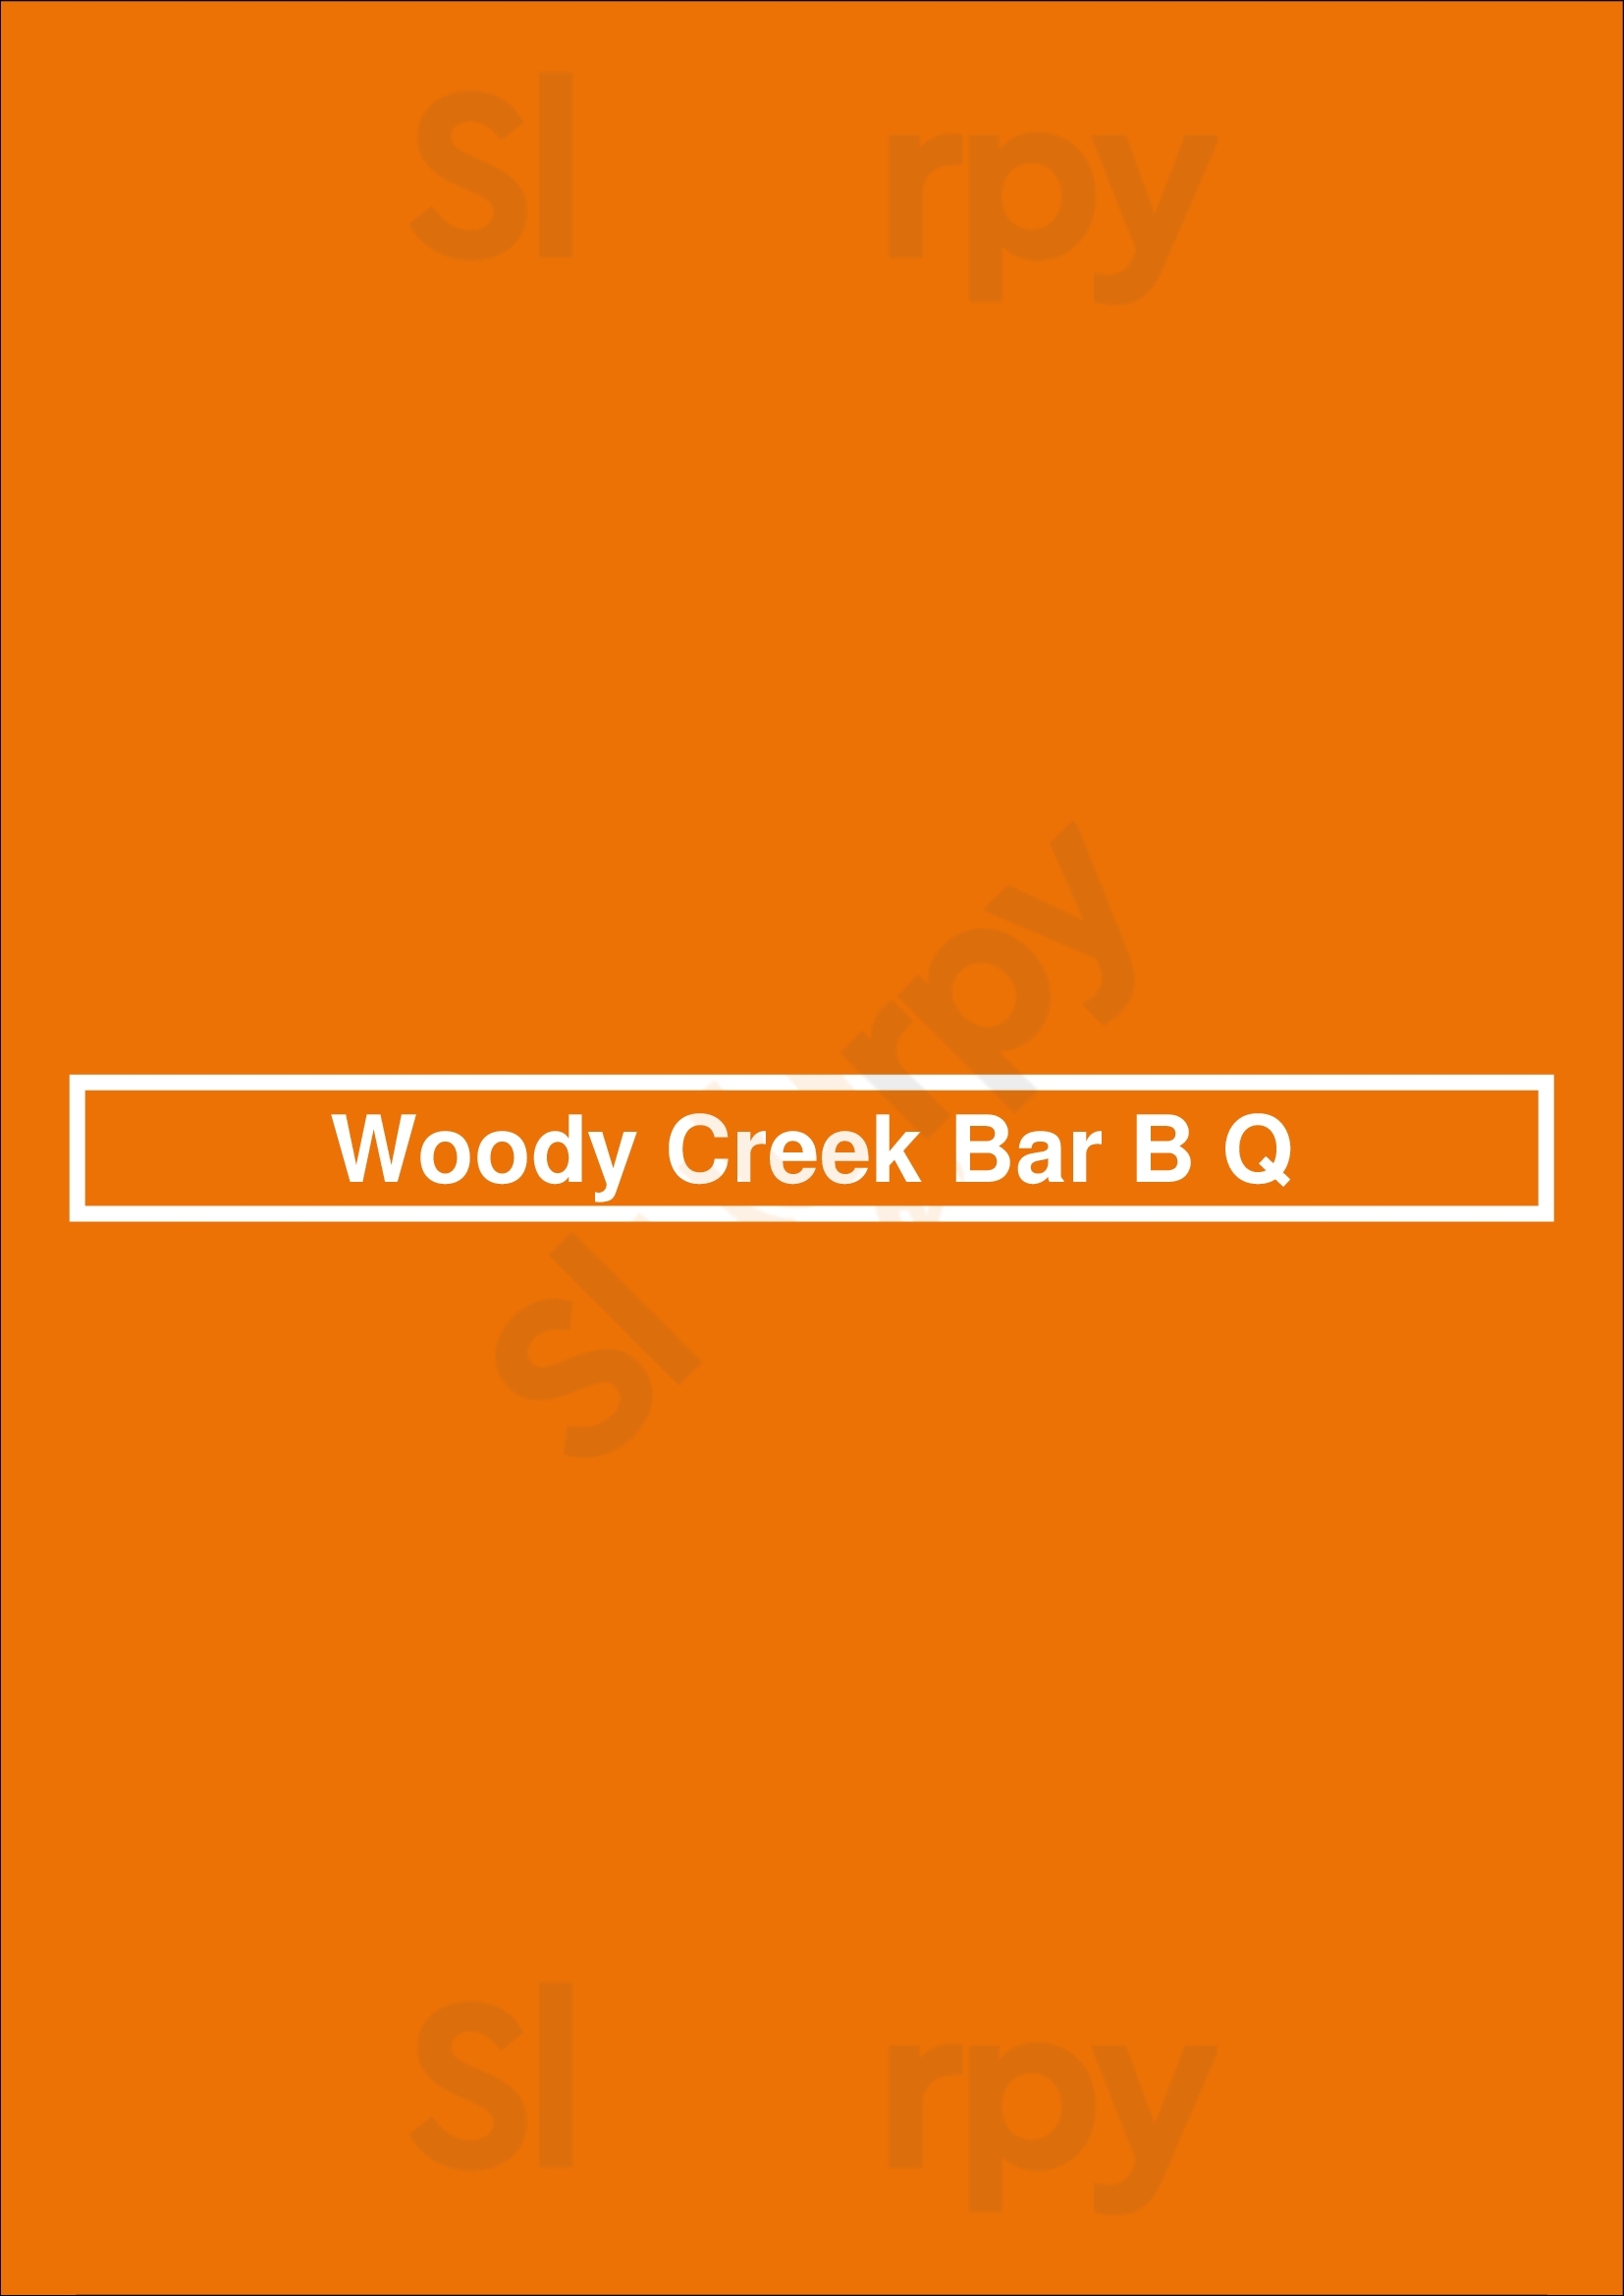 Woody Creek Bar B Q Fort Worth Menu - 1